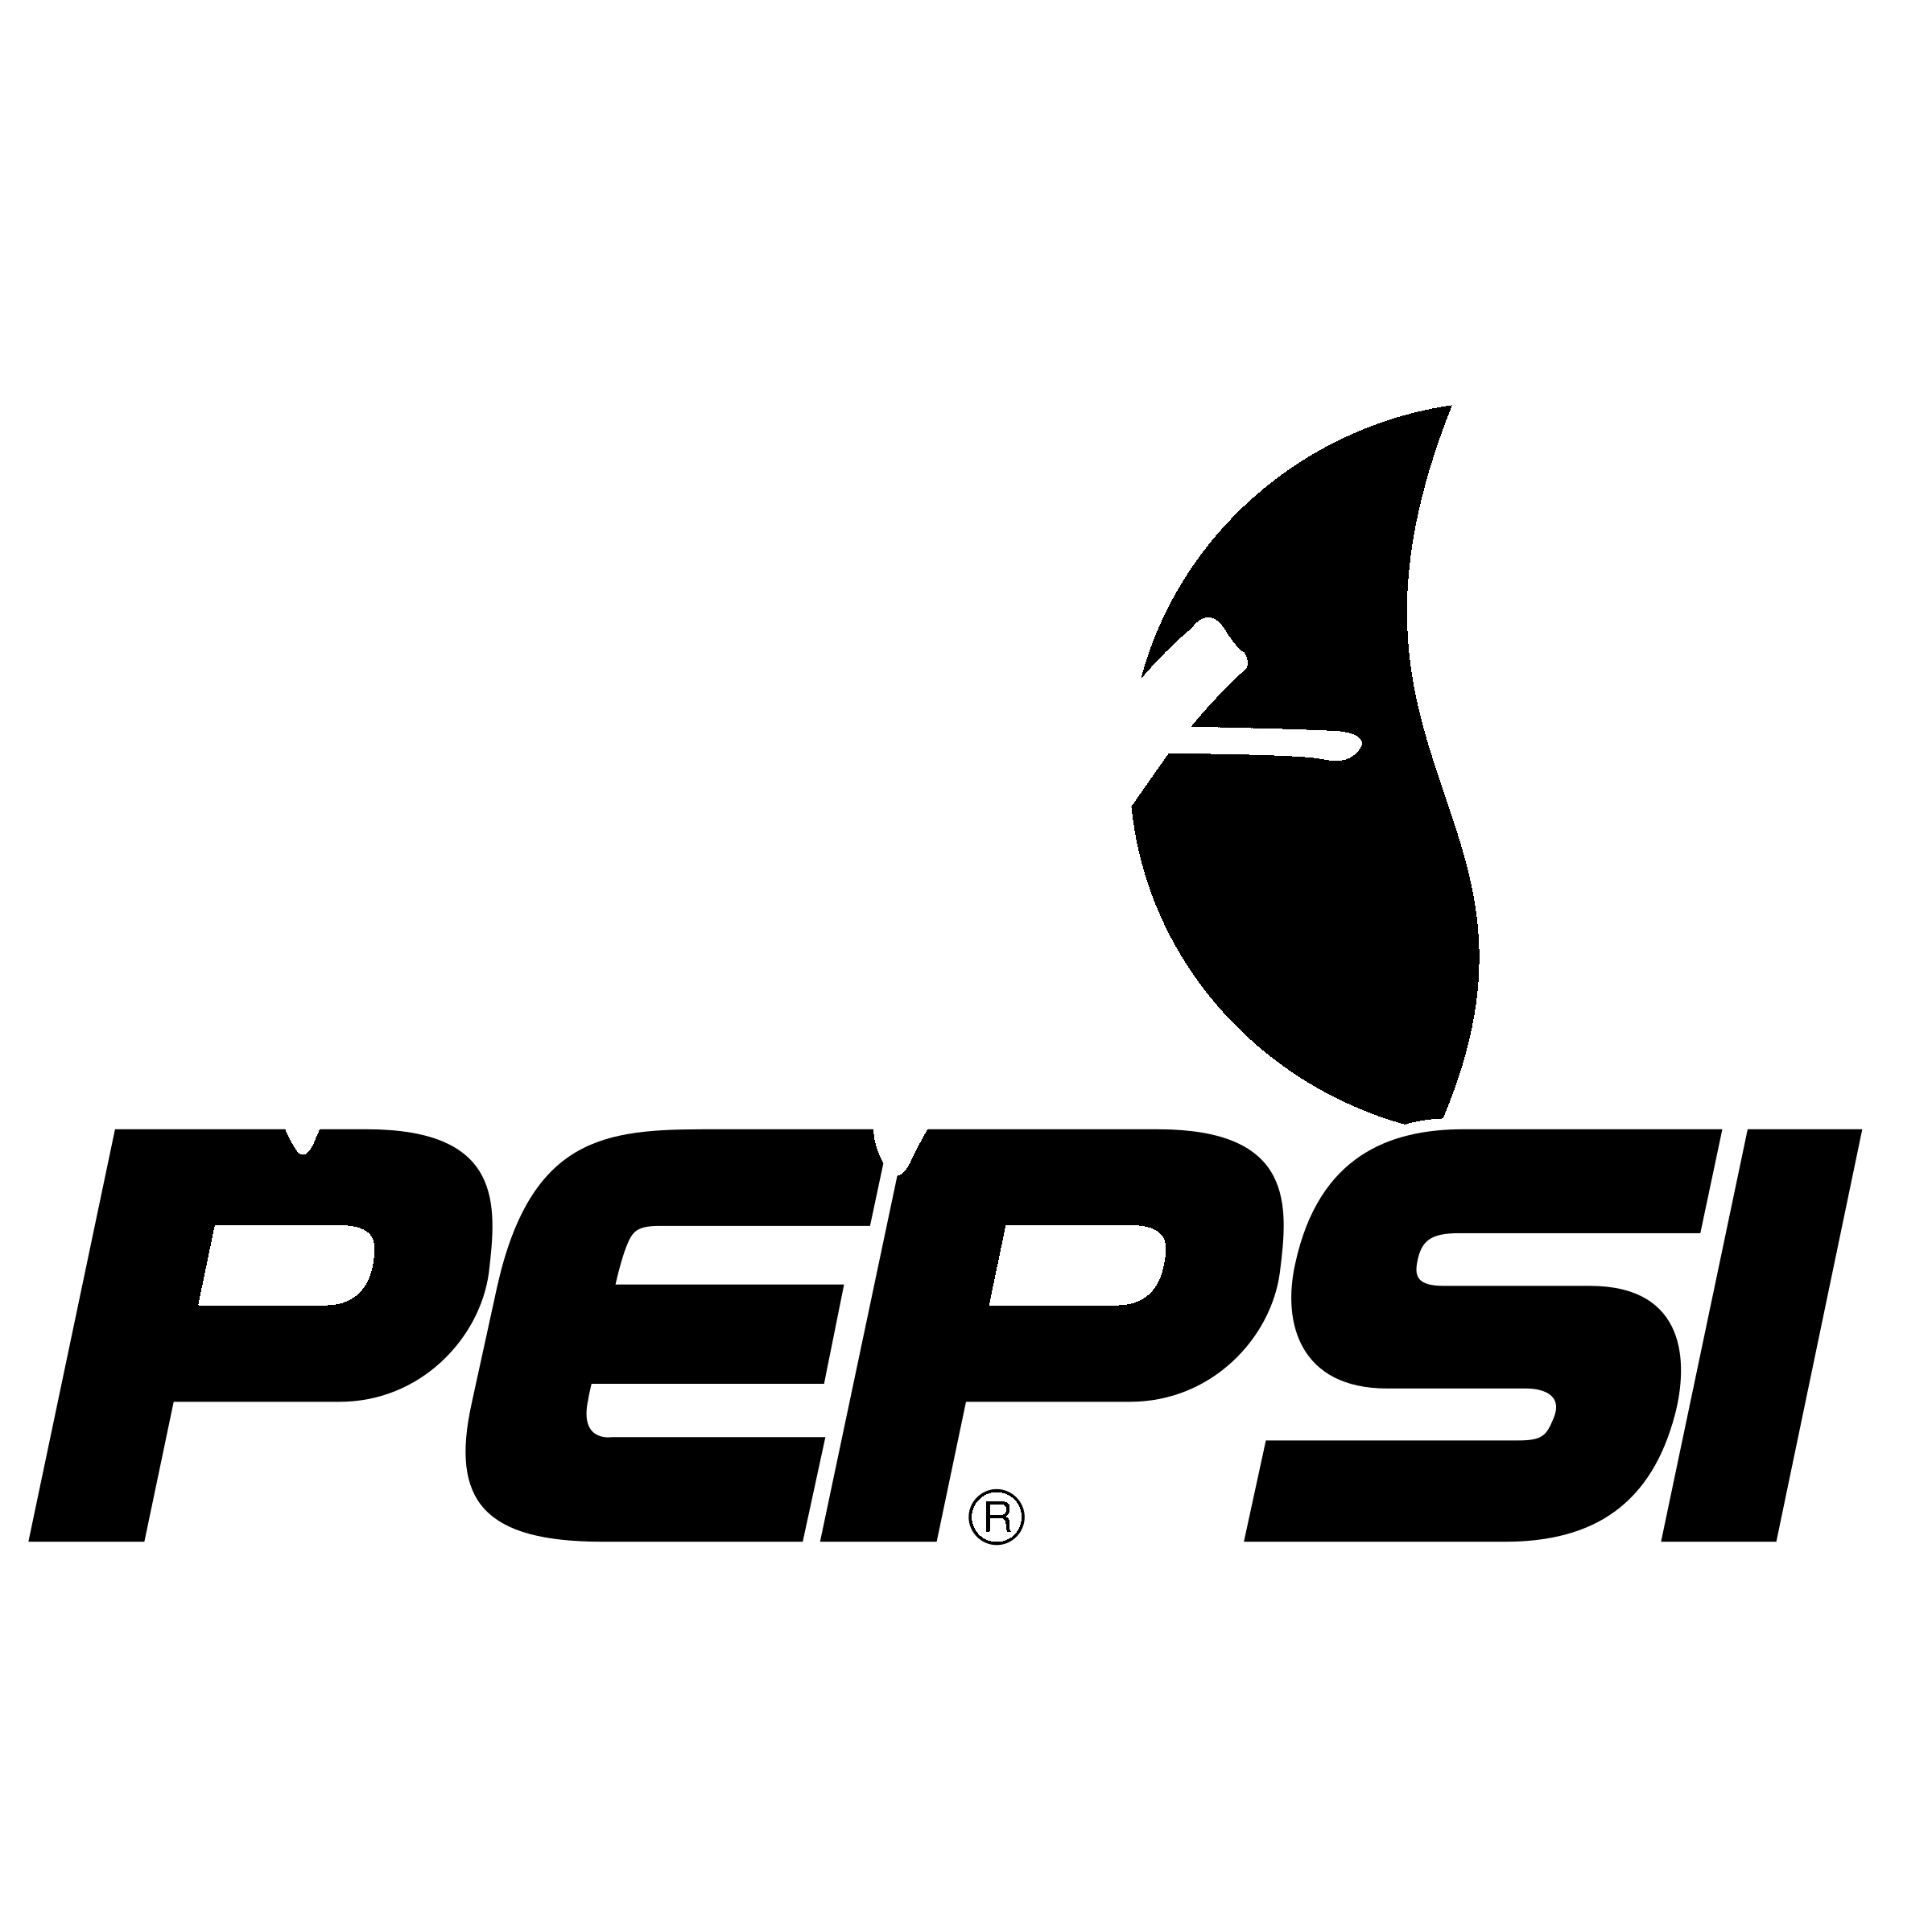 Black and White Pepsi Logo - Diet Pepsi Logo PNG Transparent & SVG Vector - Freebie Supply